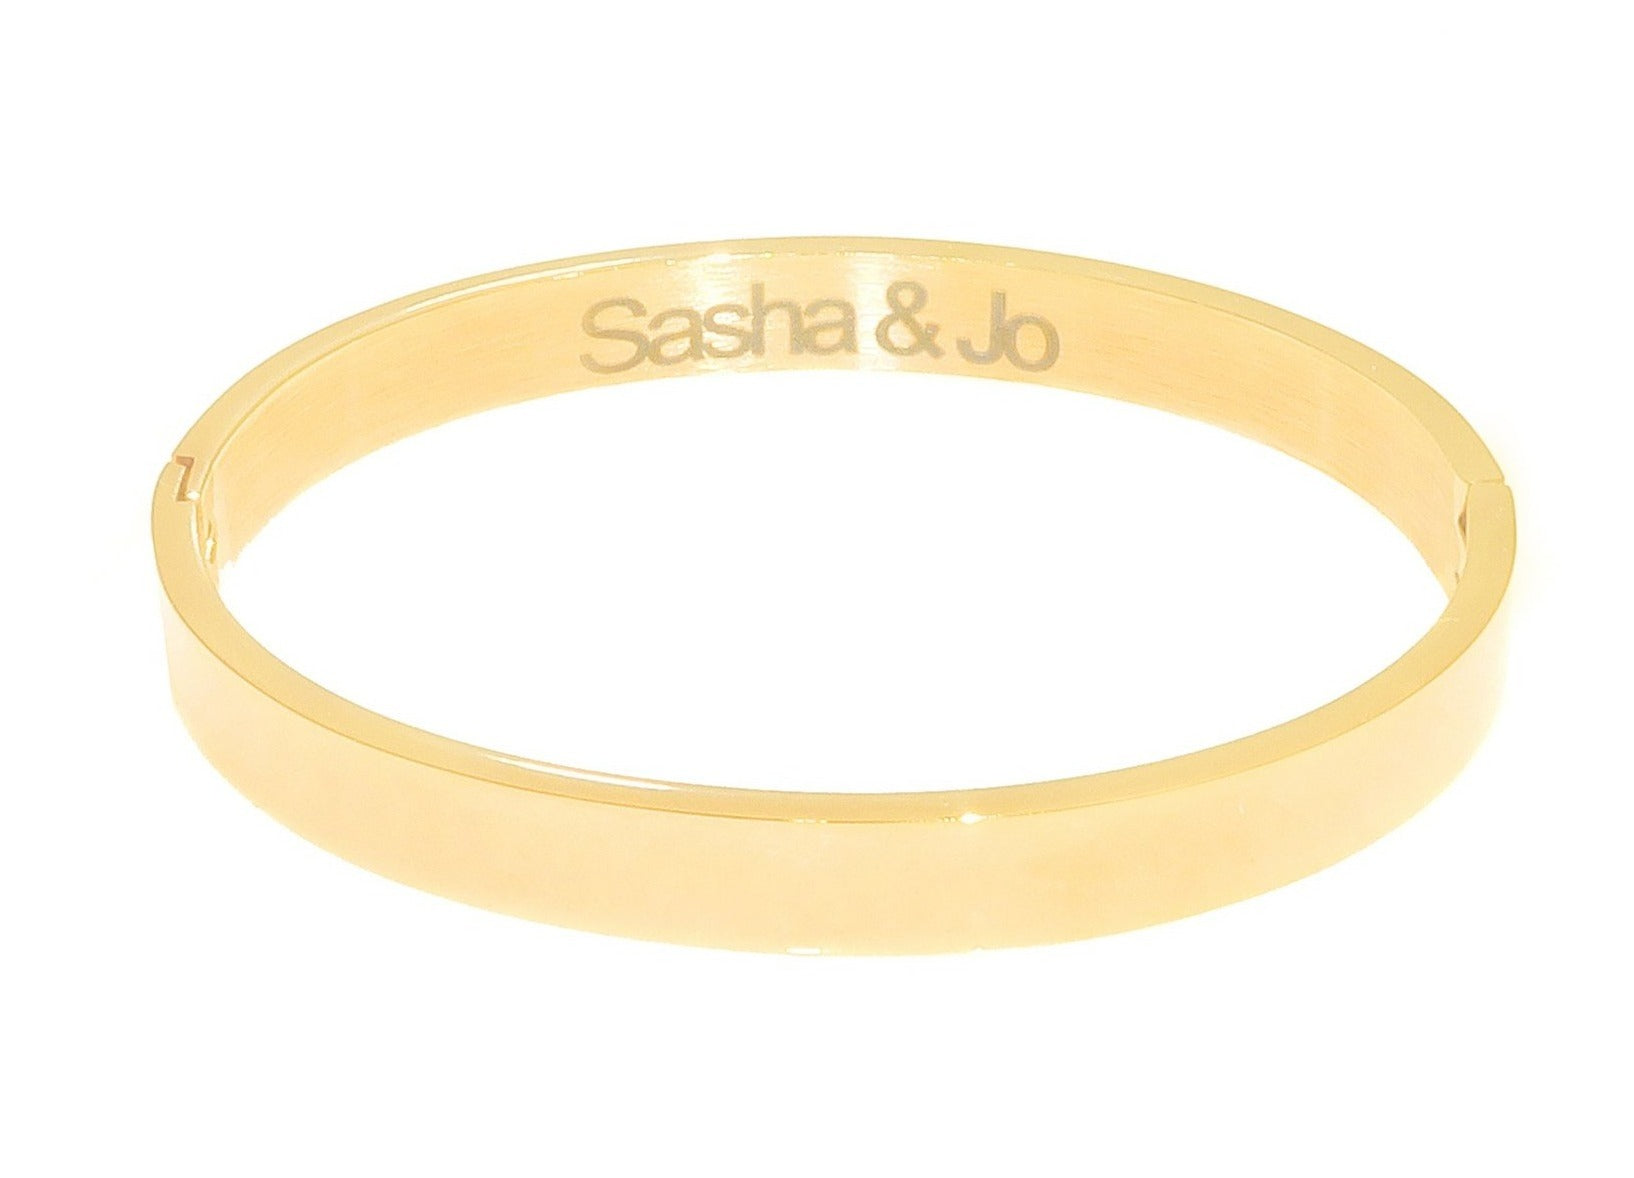 Sasha & Jo gold stainless steel bangle